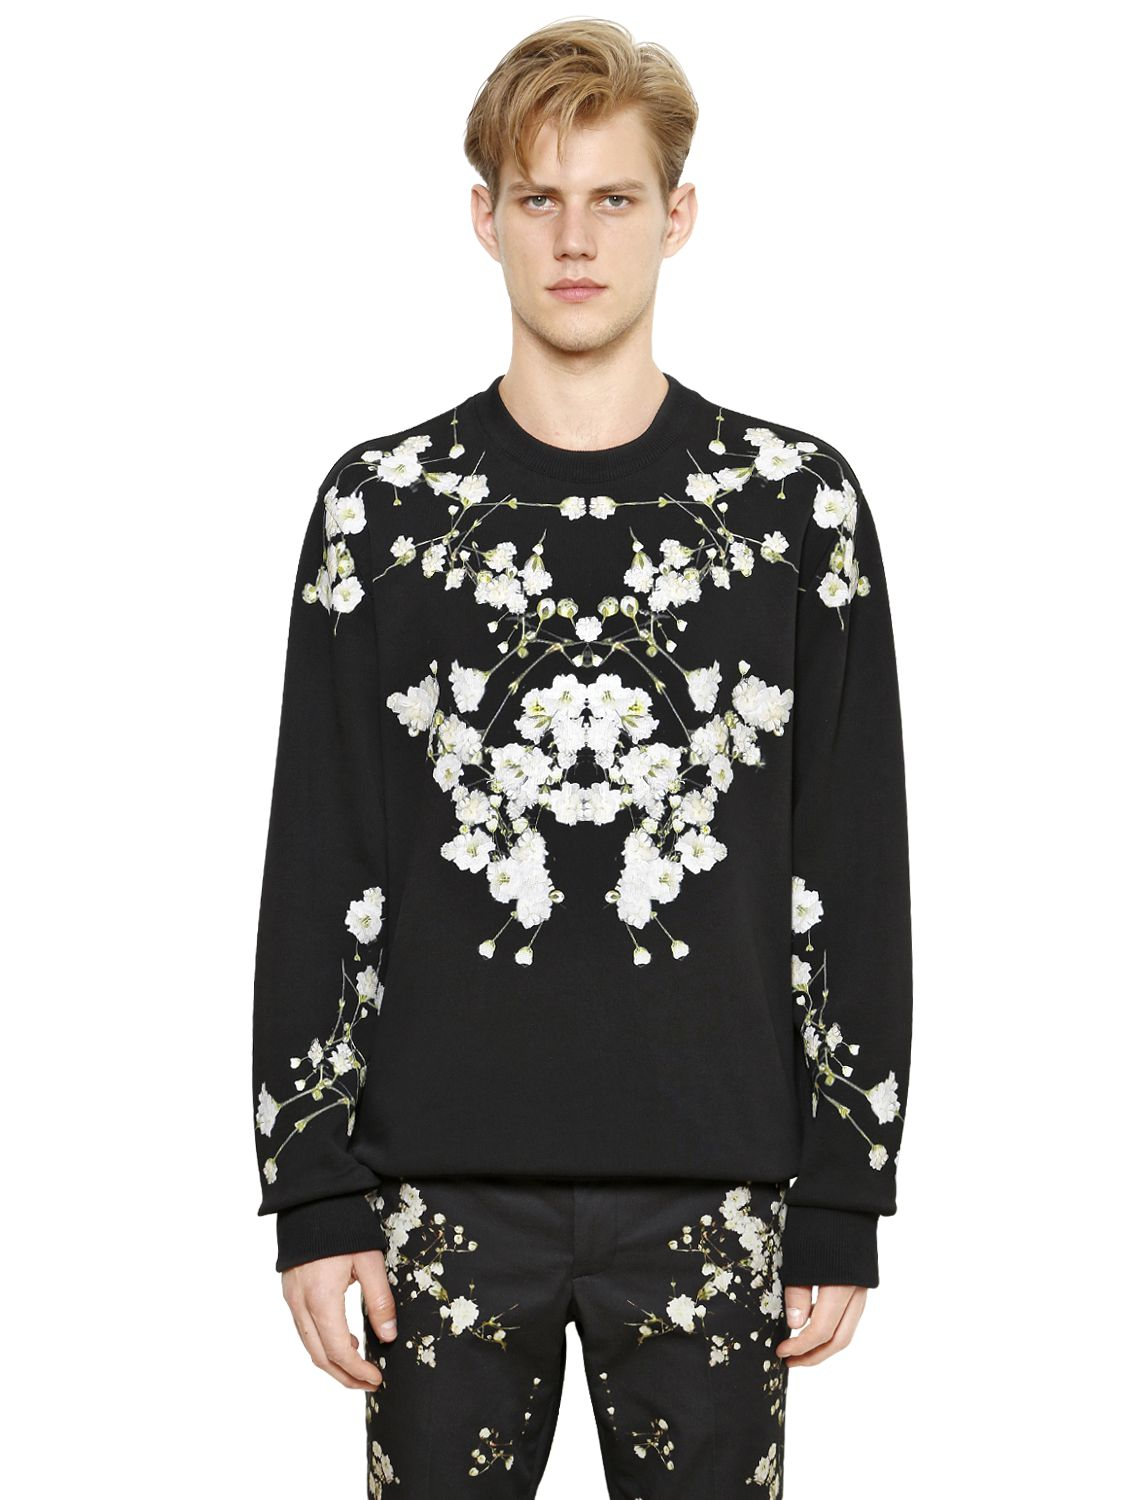 givenchy floral sweatshirt